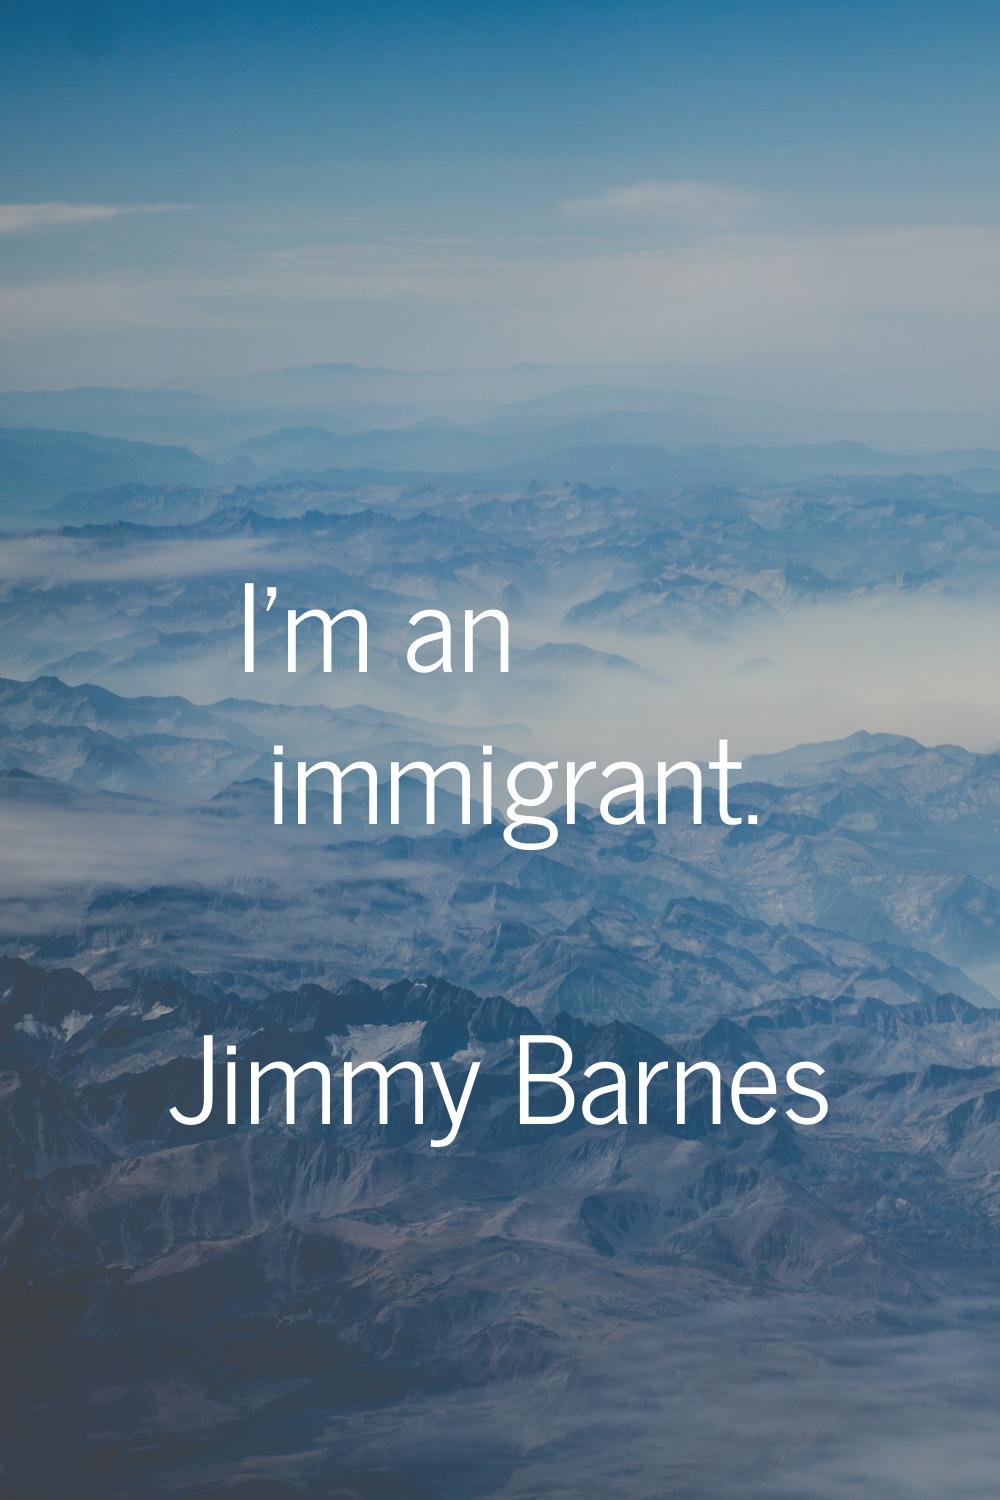 I'm an immigrant.